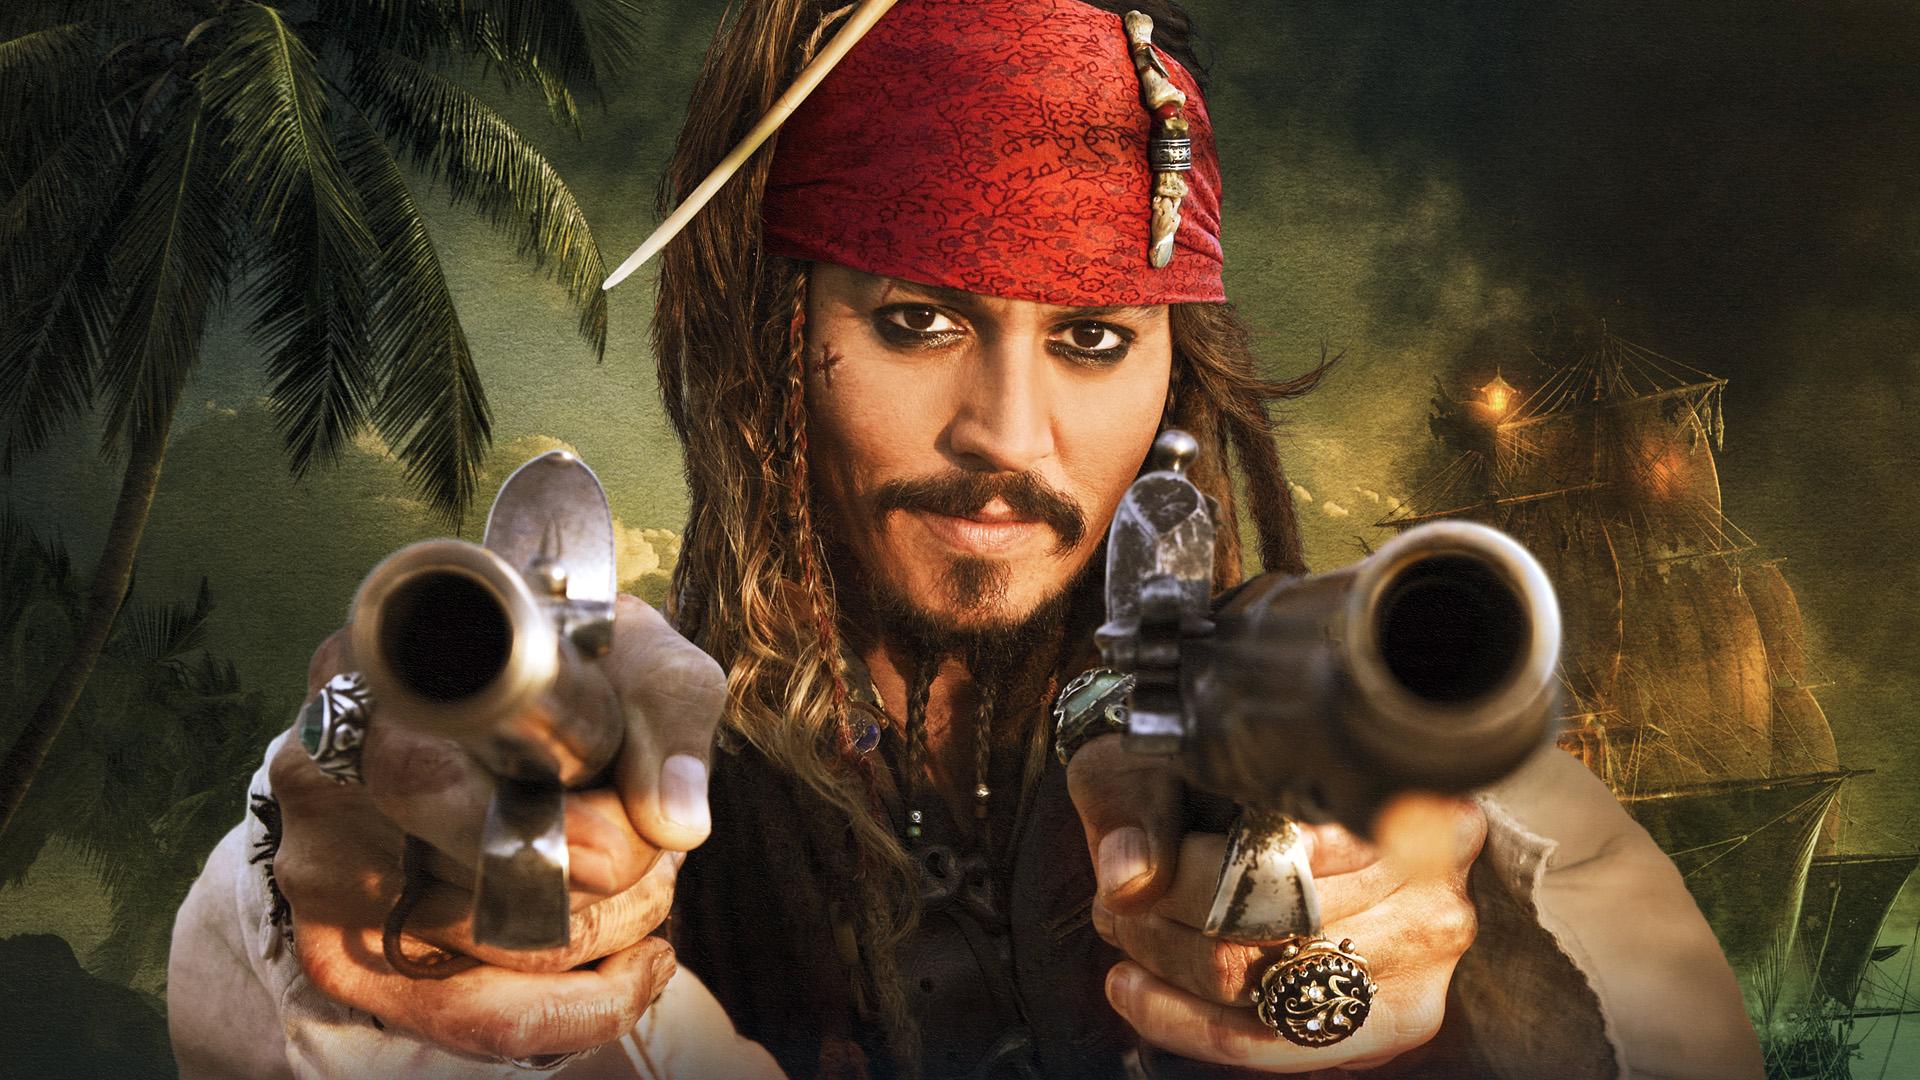 pirates of the caribbean, jack sparrow, movie, pirates of the caribbean: on stranger tides, johnny depp